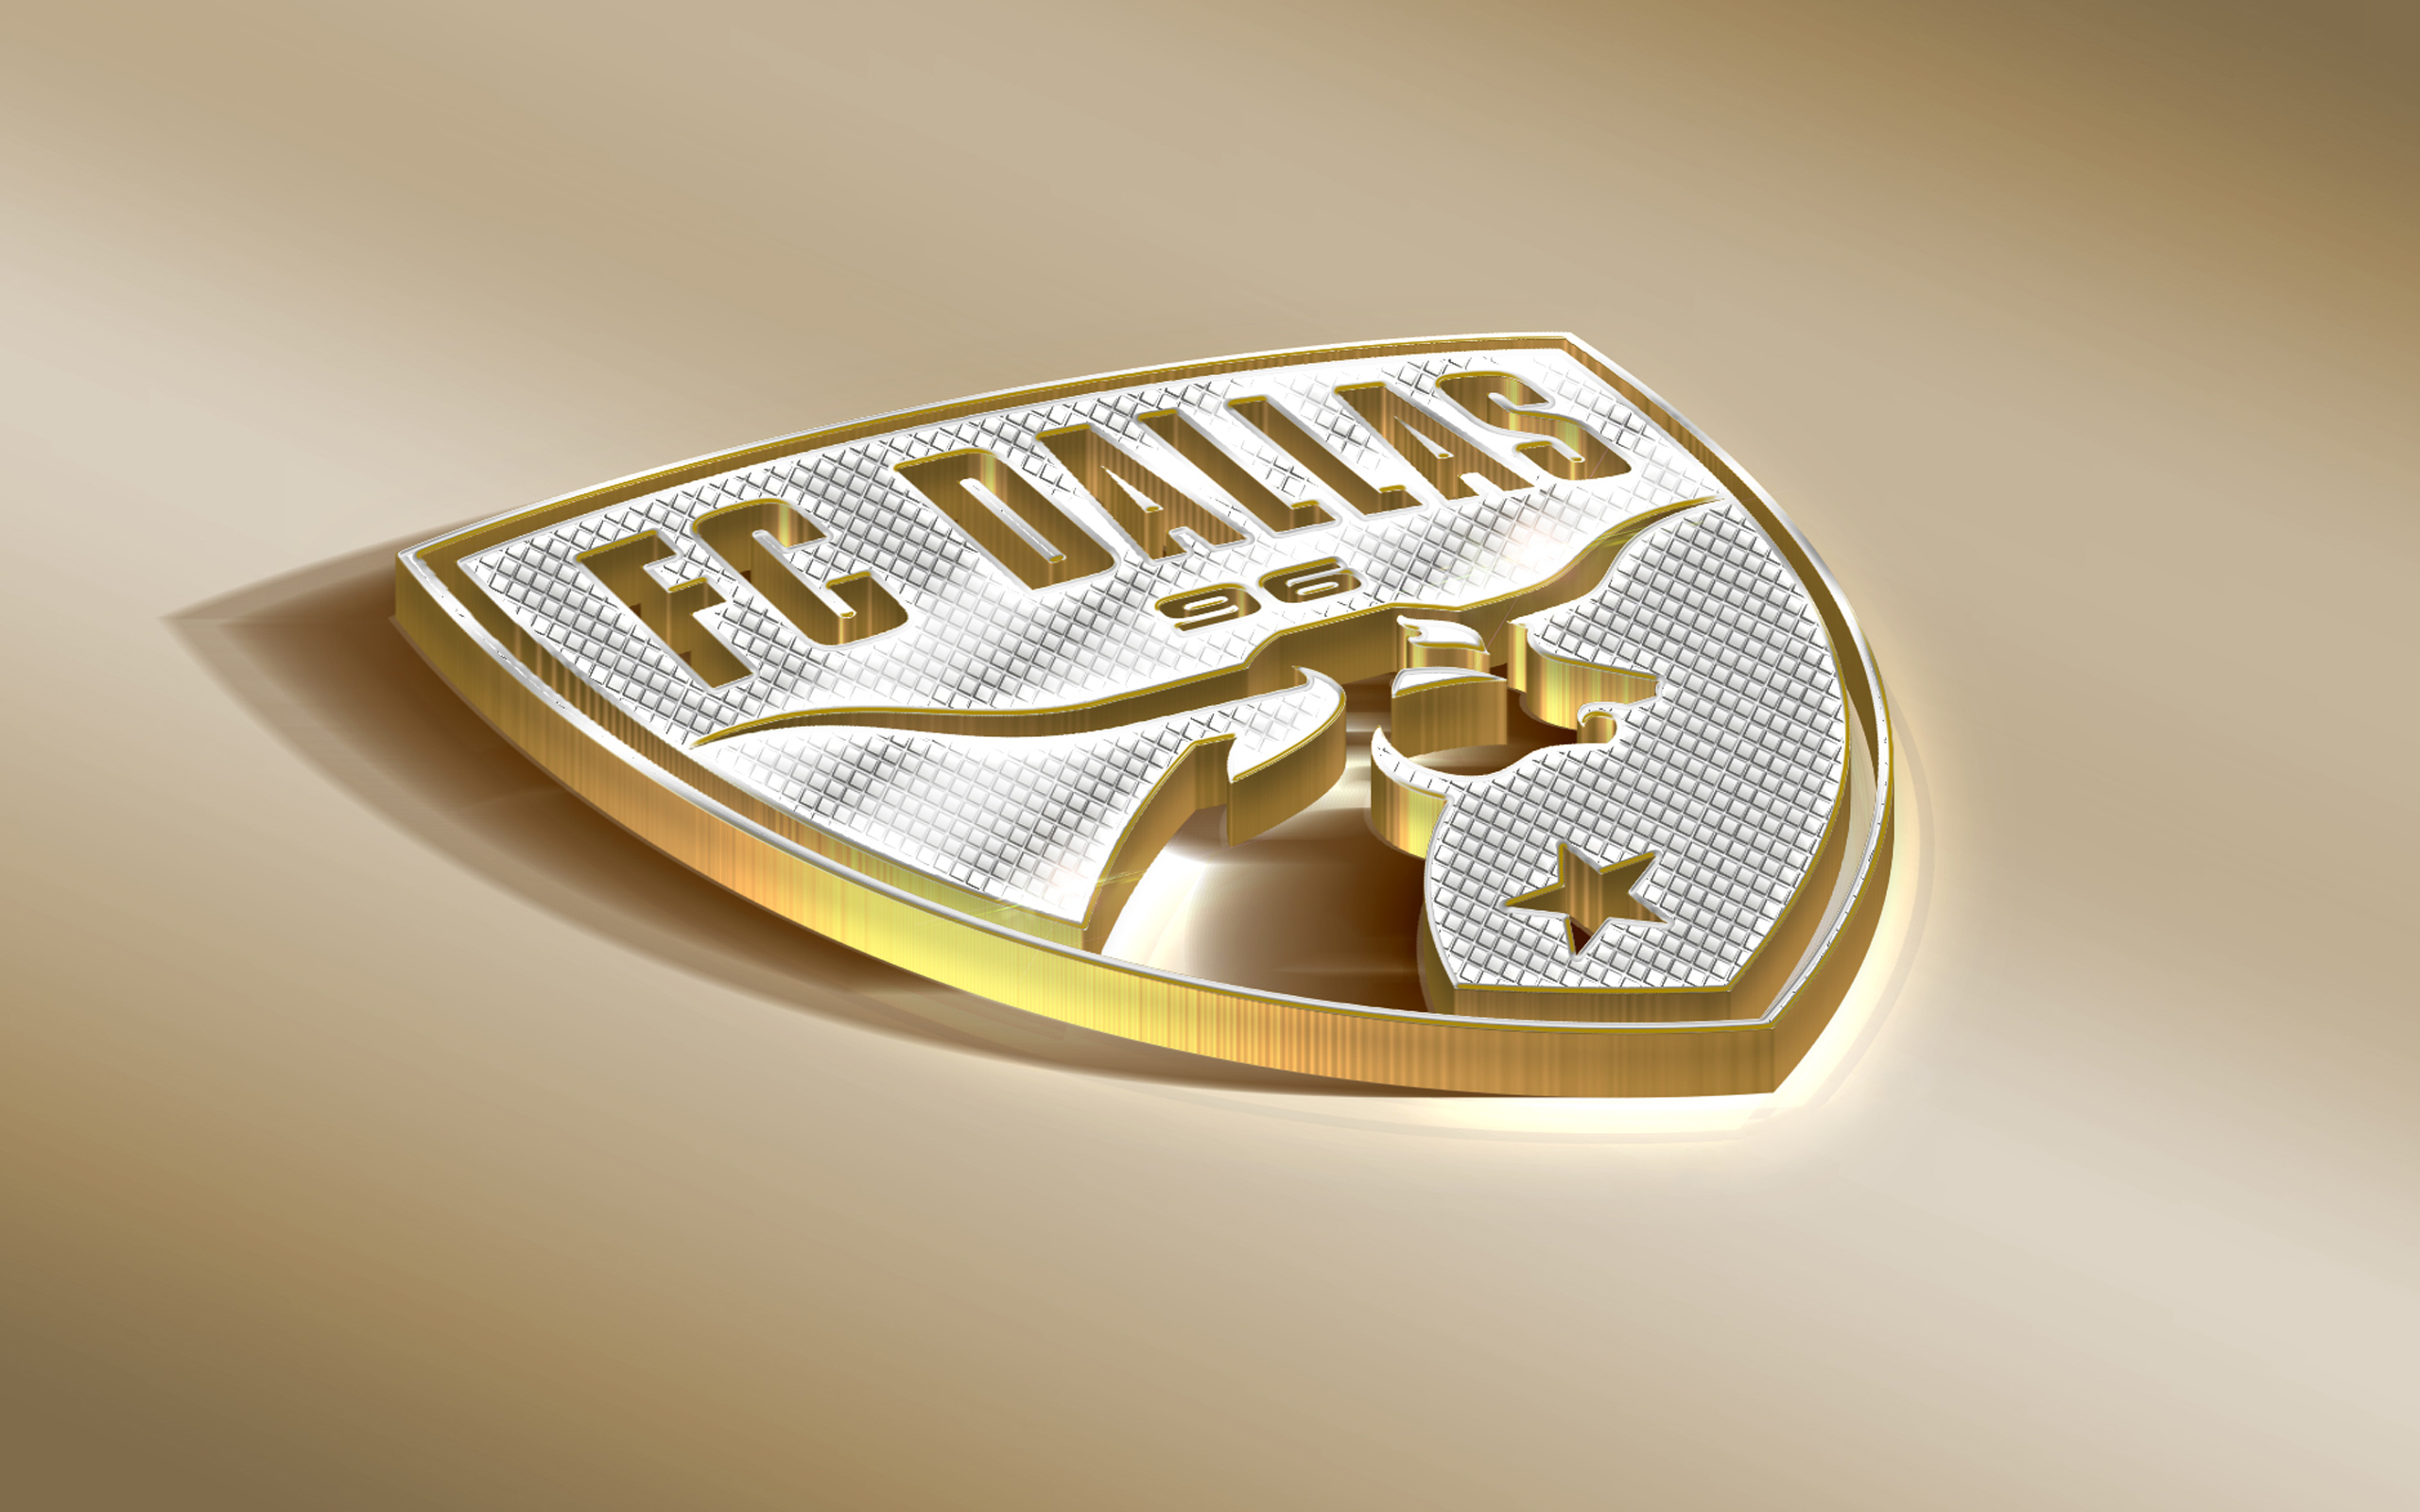 Emblem Fc Dallas Logo Mls Soccer 2560x1600